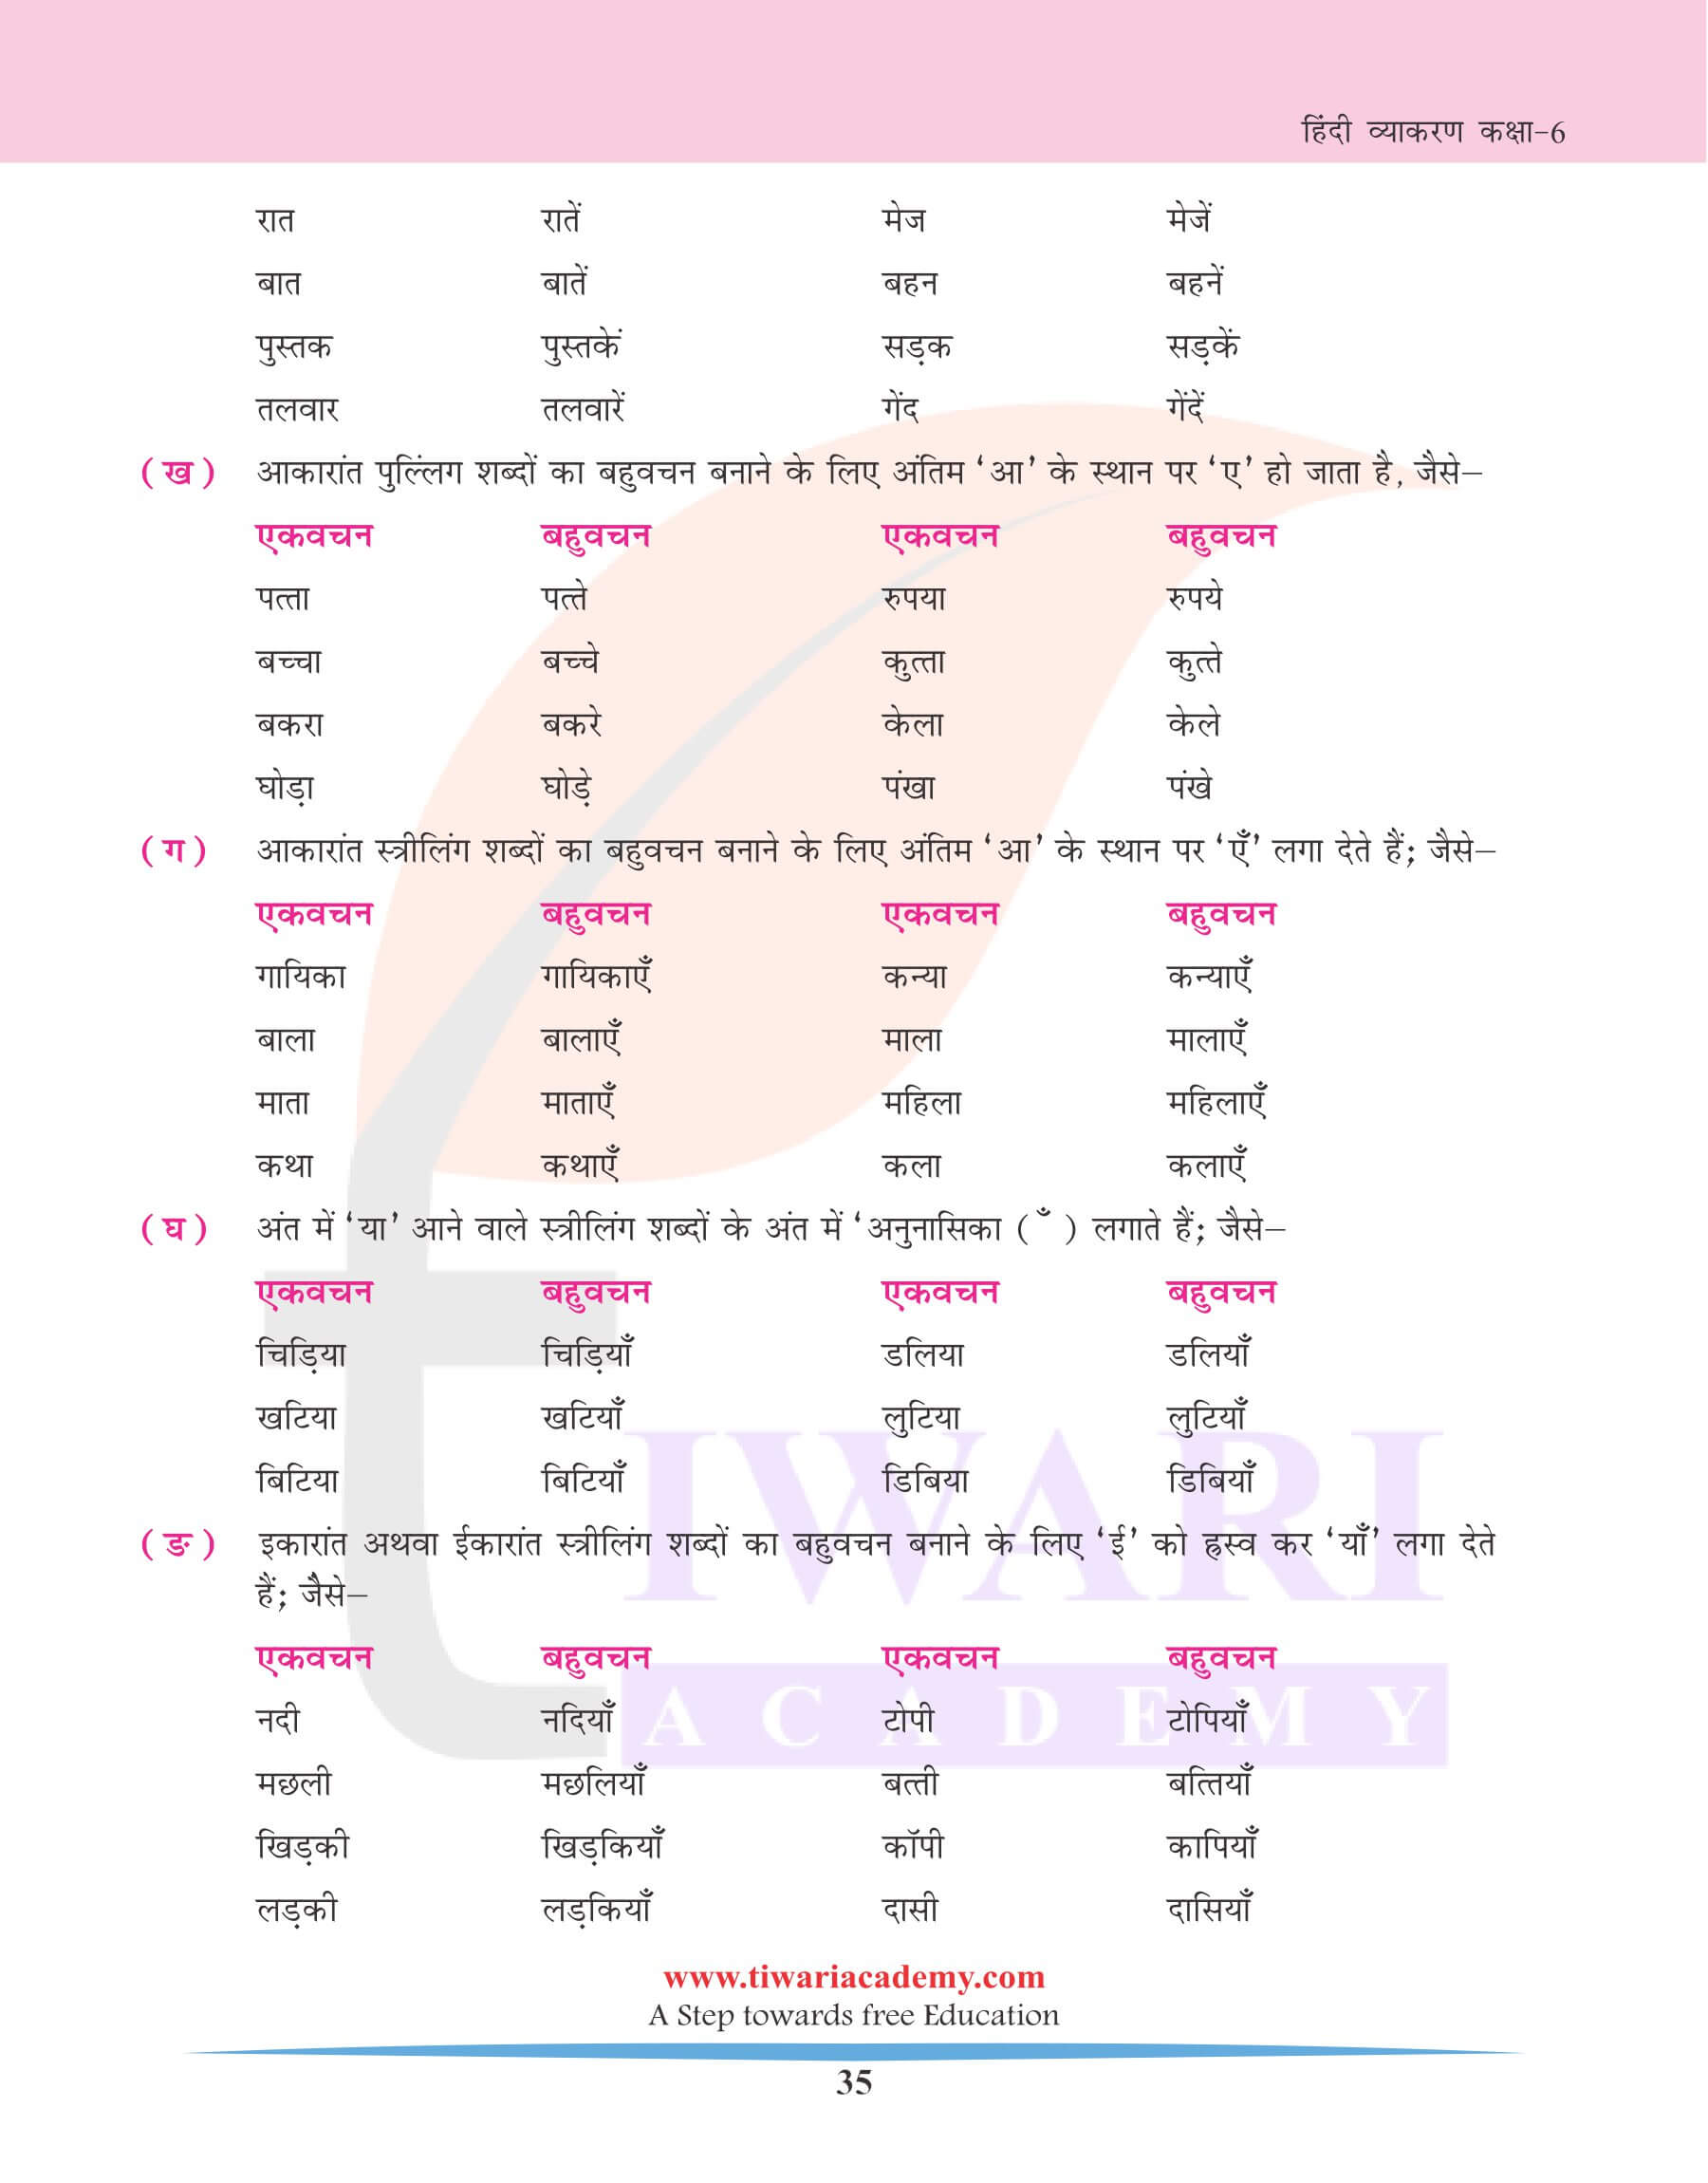 कक्षा 6 हिंदी व्याकरण अध्याय 7 वचन के लिए अभ्यास